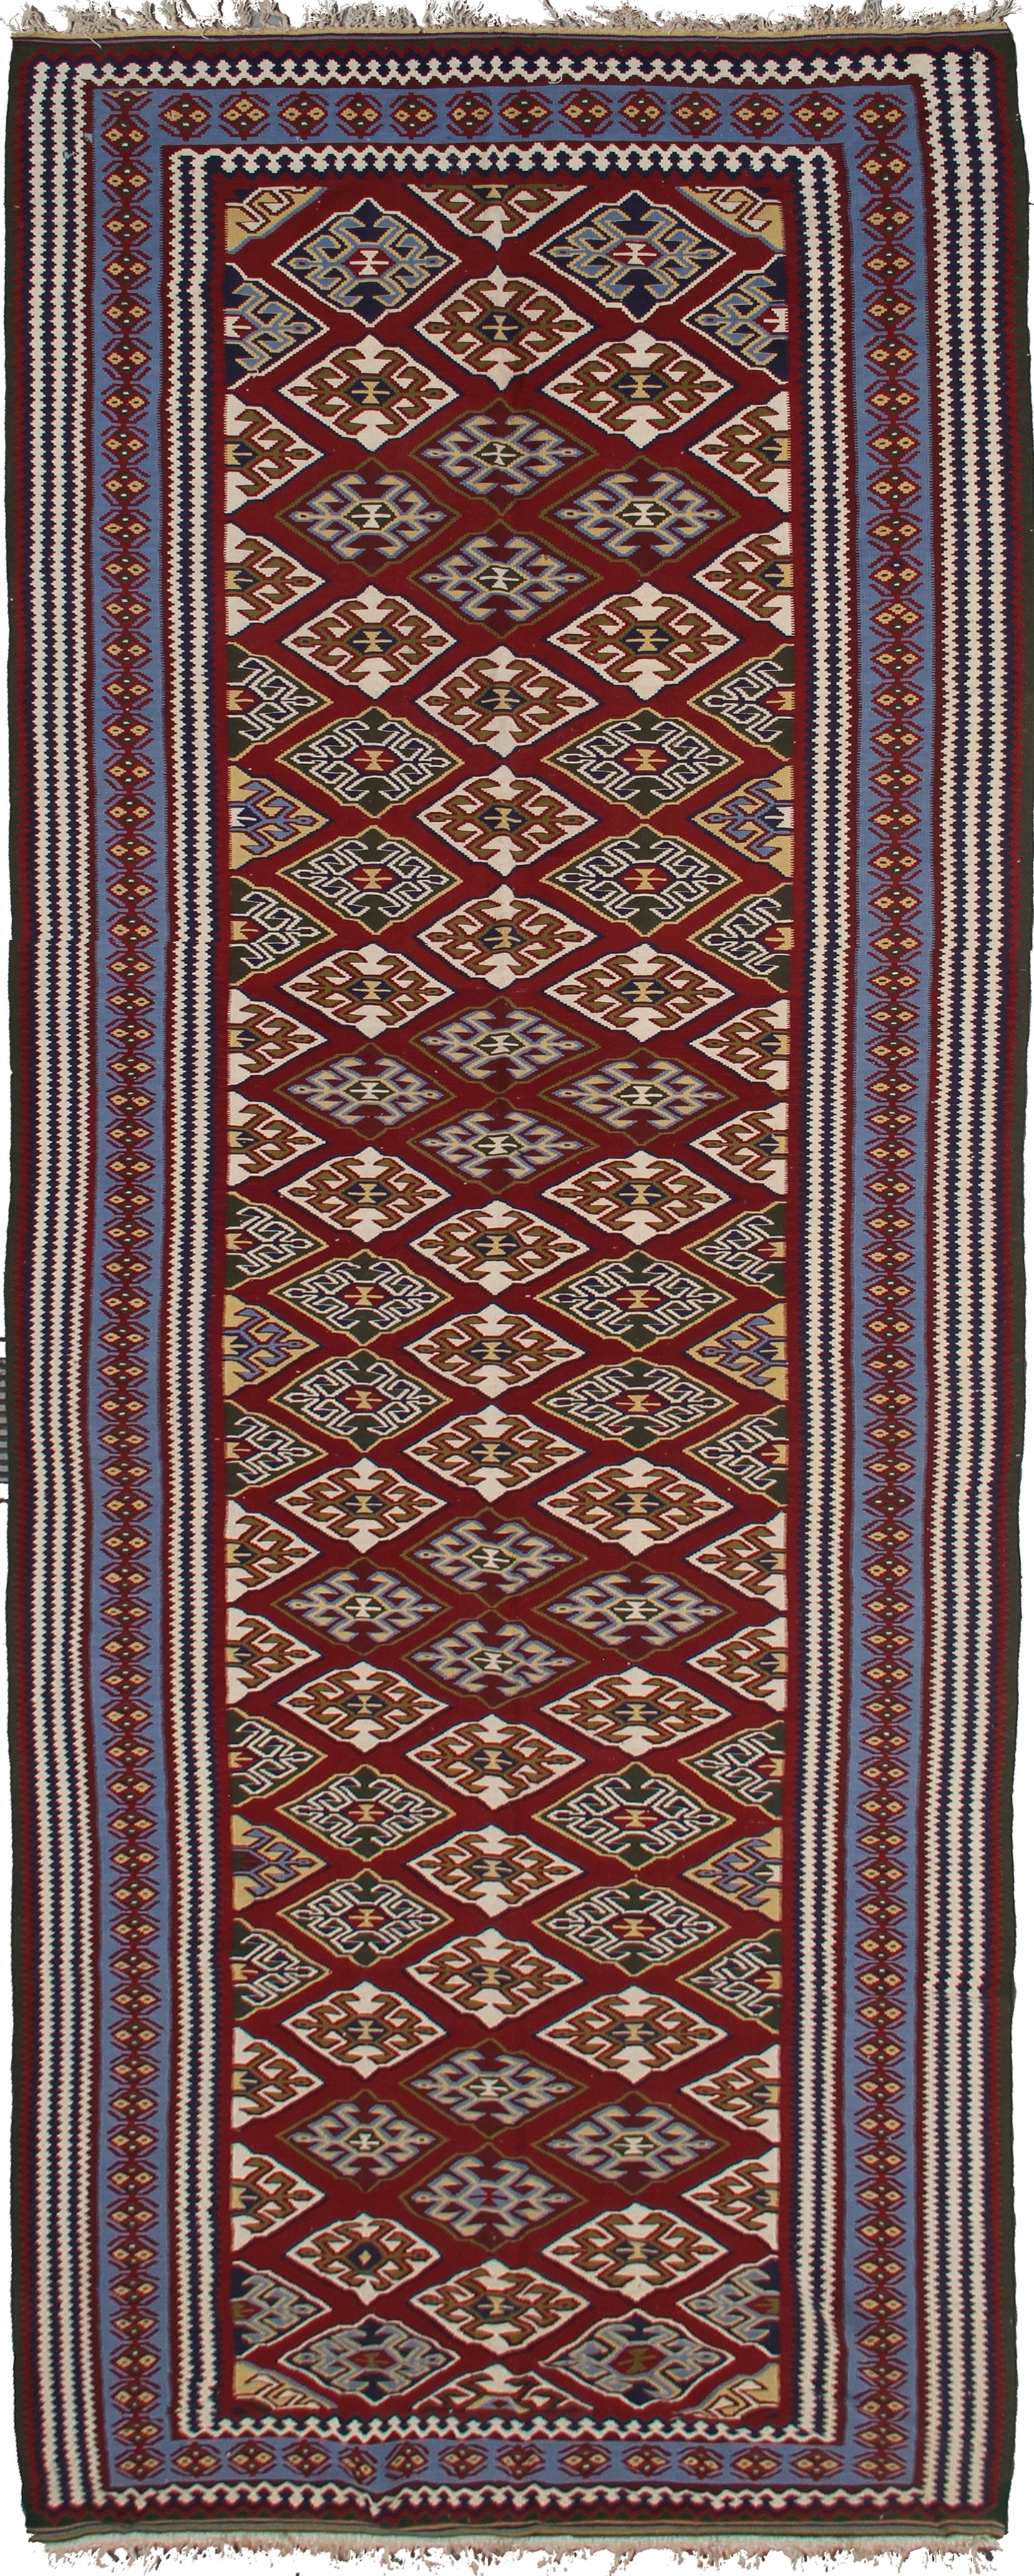 5'x19' Vintage Persian Kilim